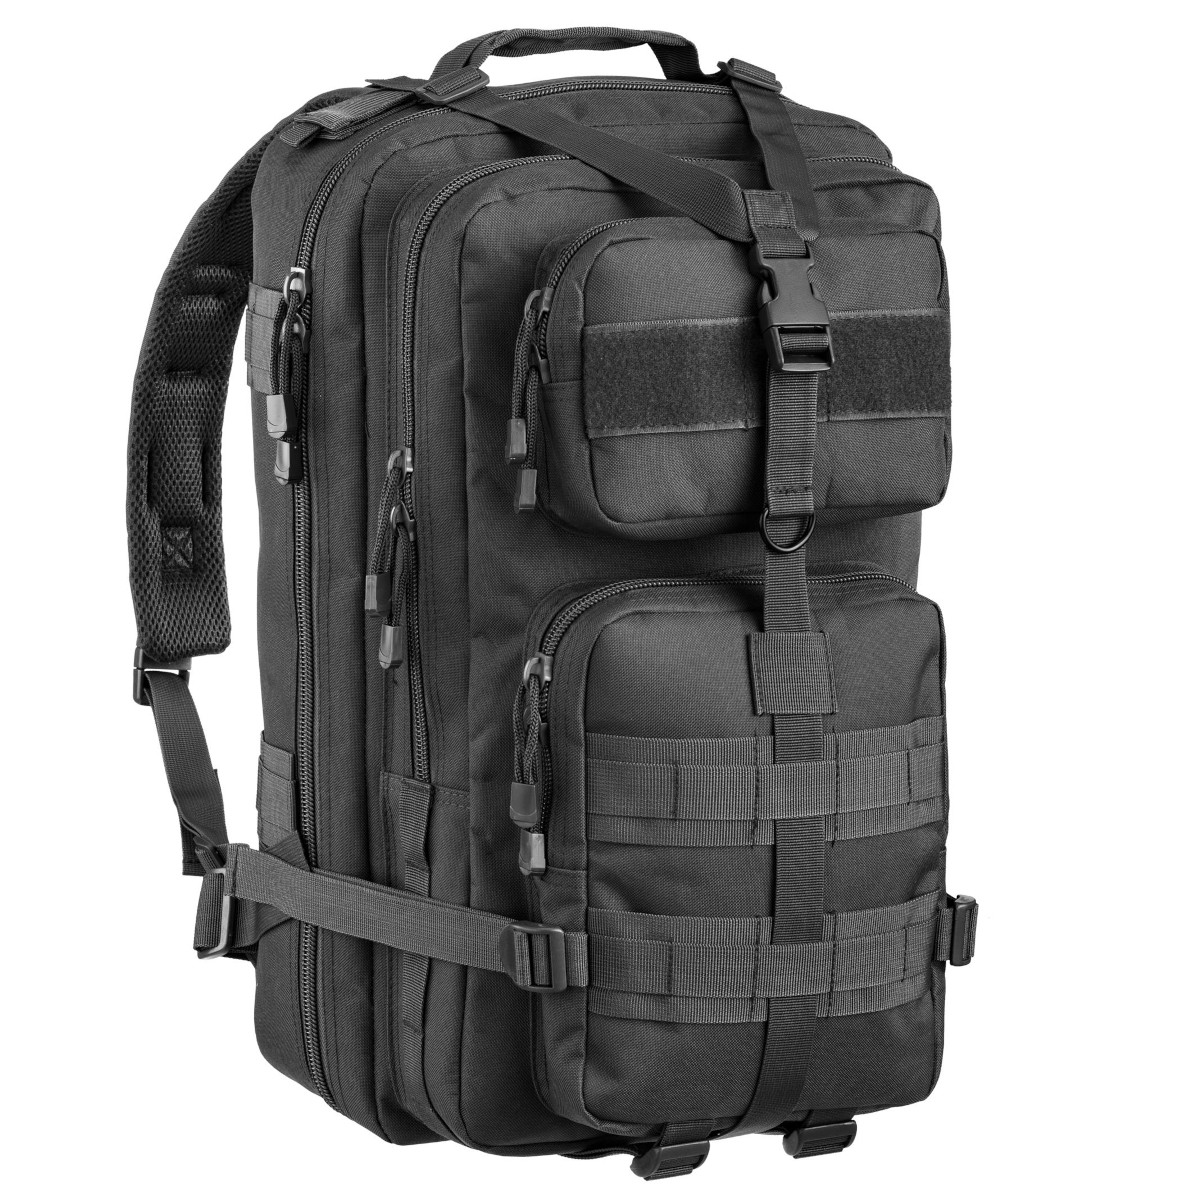 Defcon 5 rugzak Tactical backpack - Hydro compatible - 40 liter -Zwart